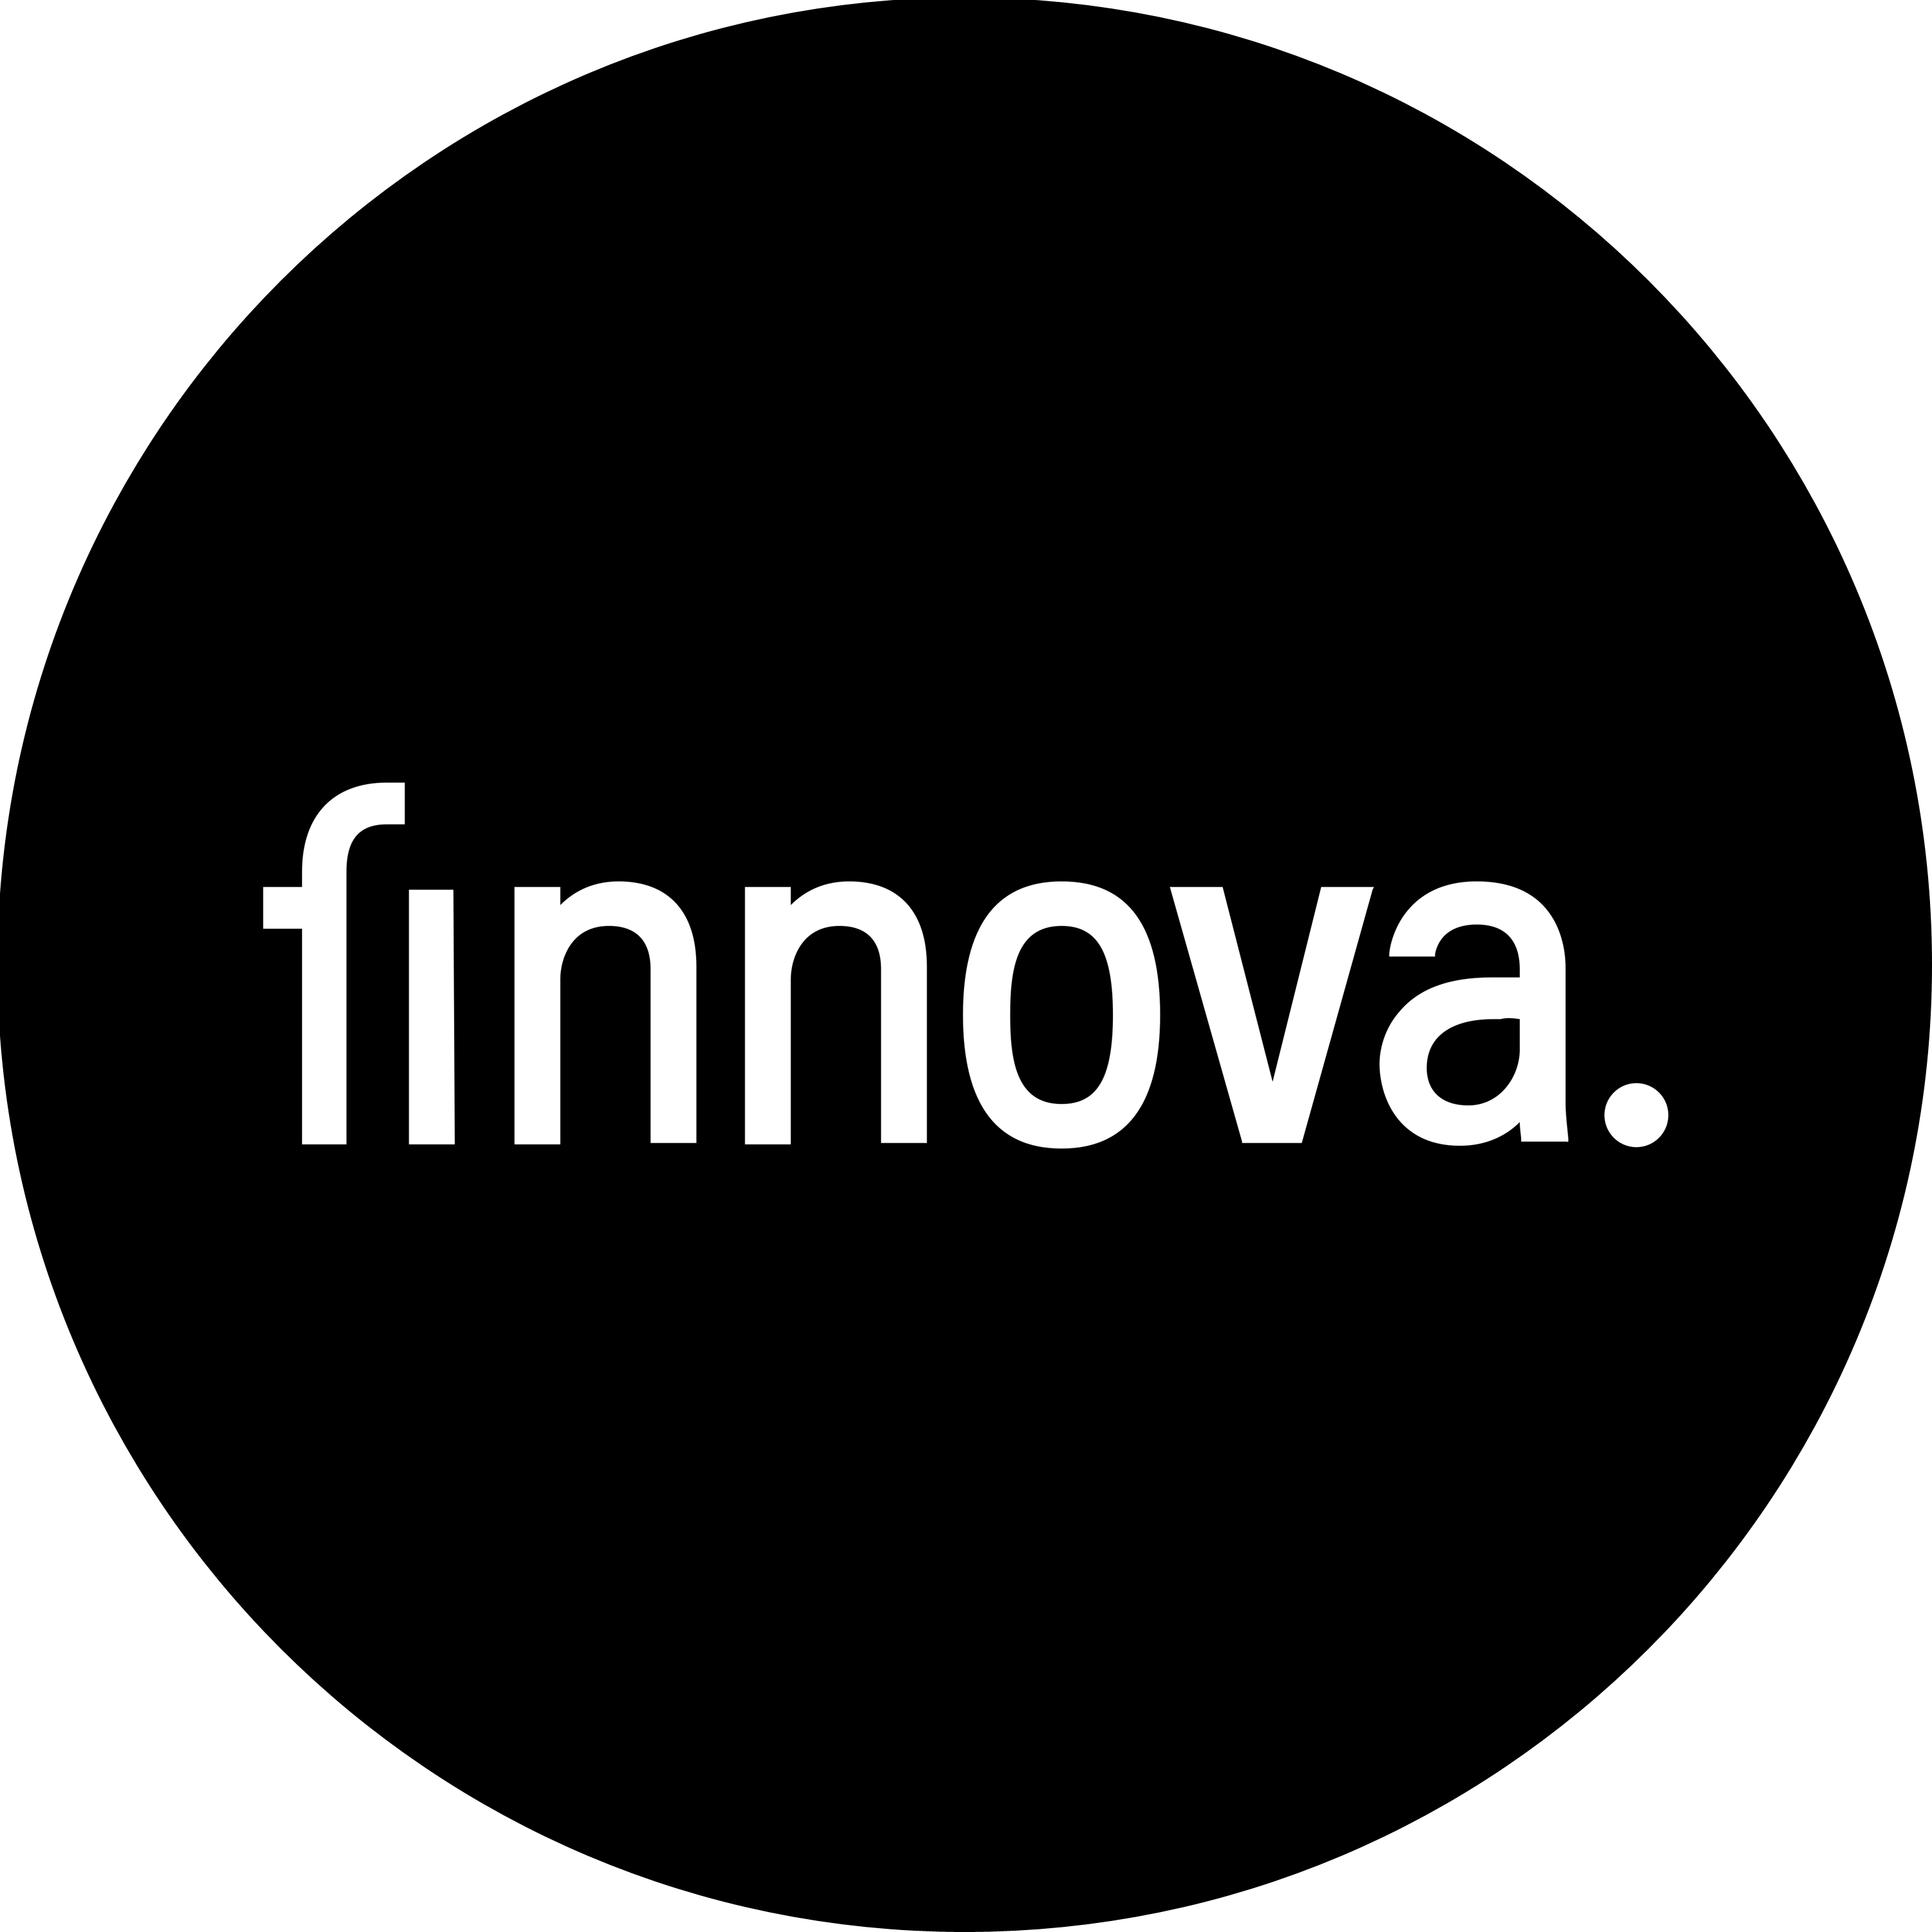 Finnova Logo Transparent Gallery